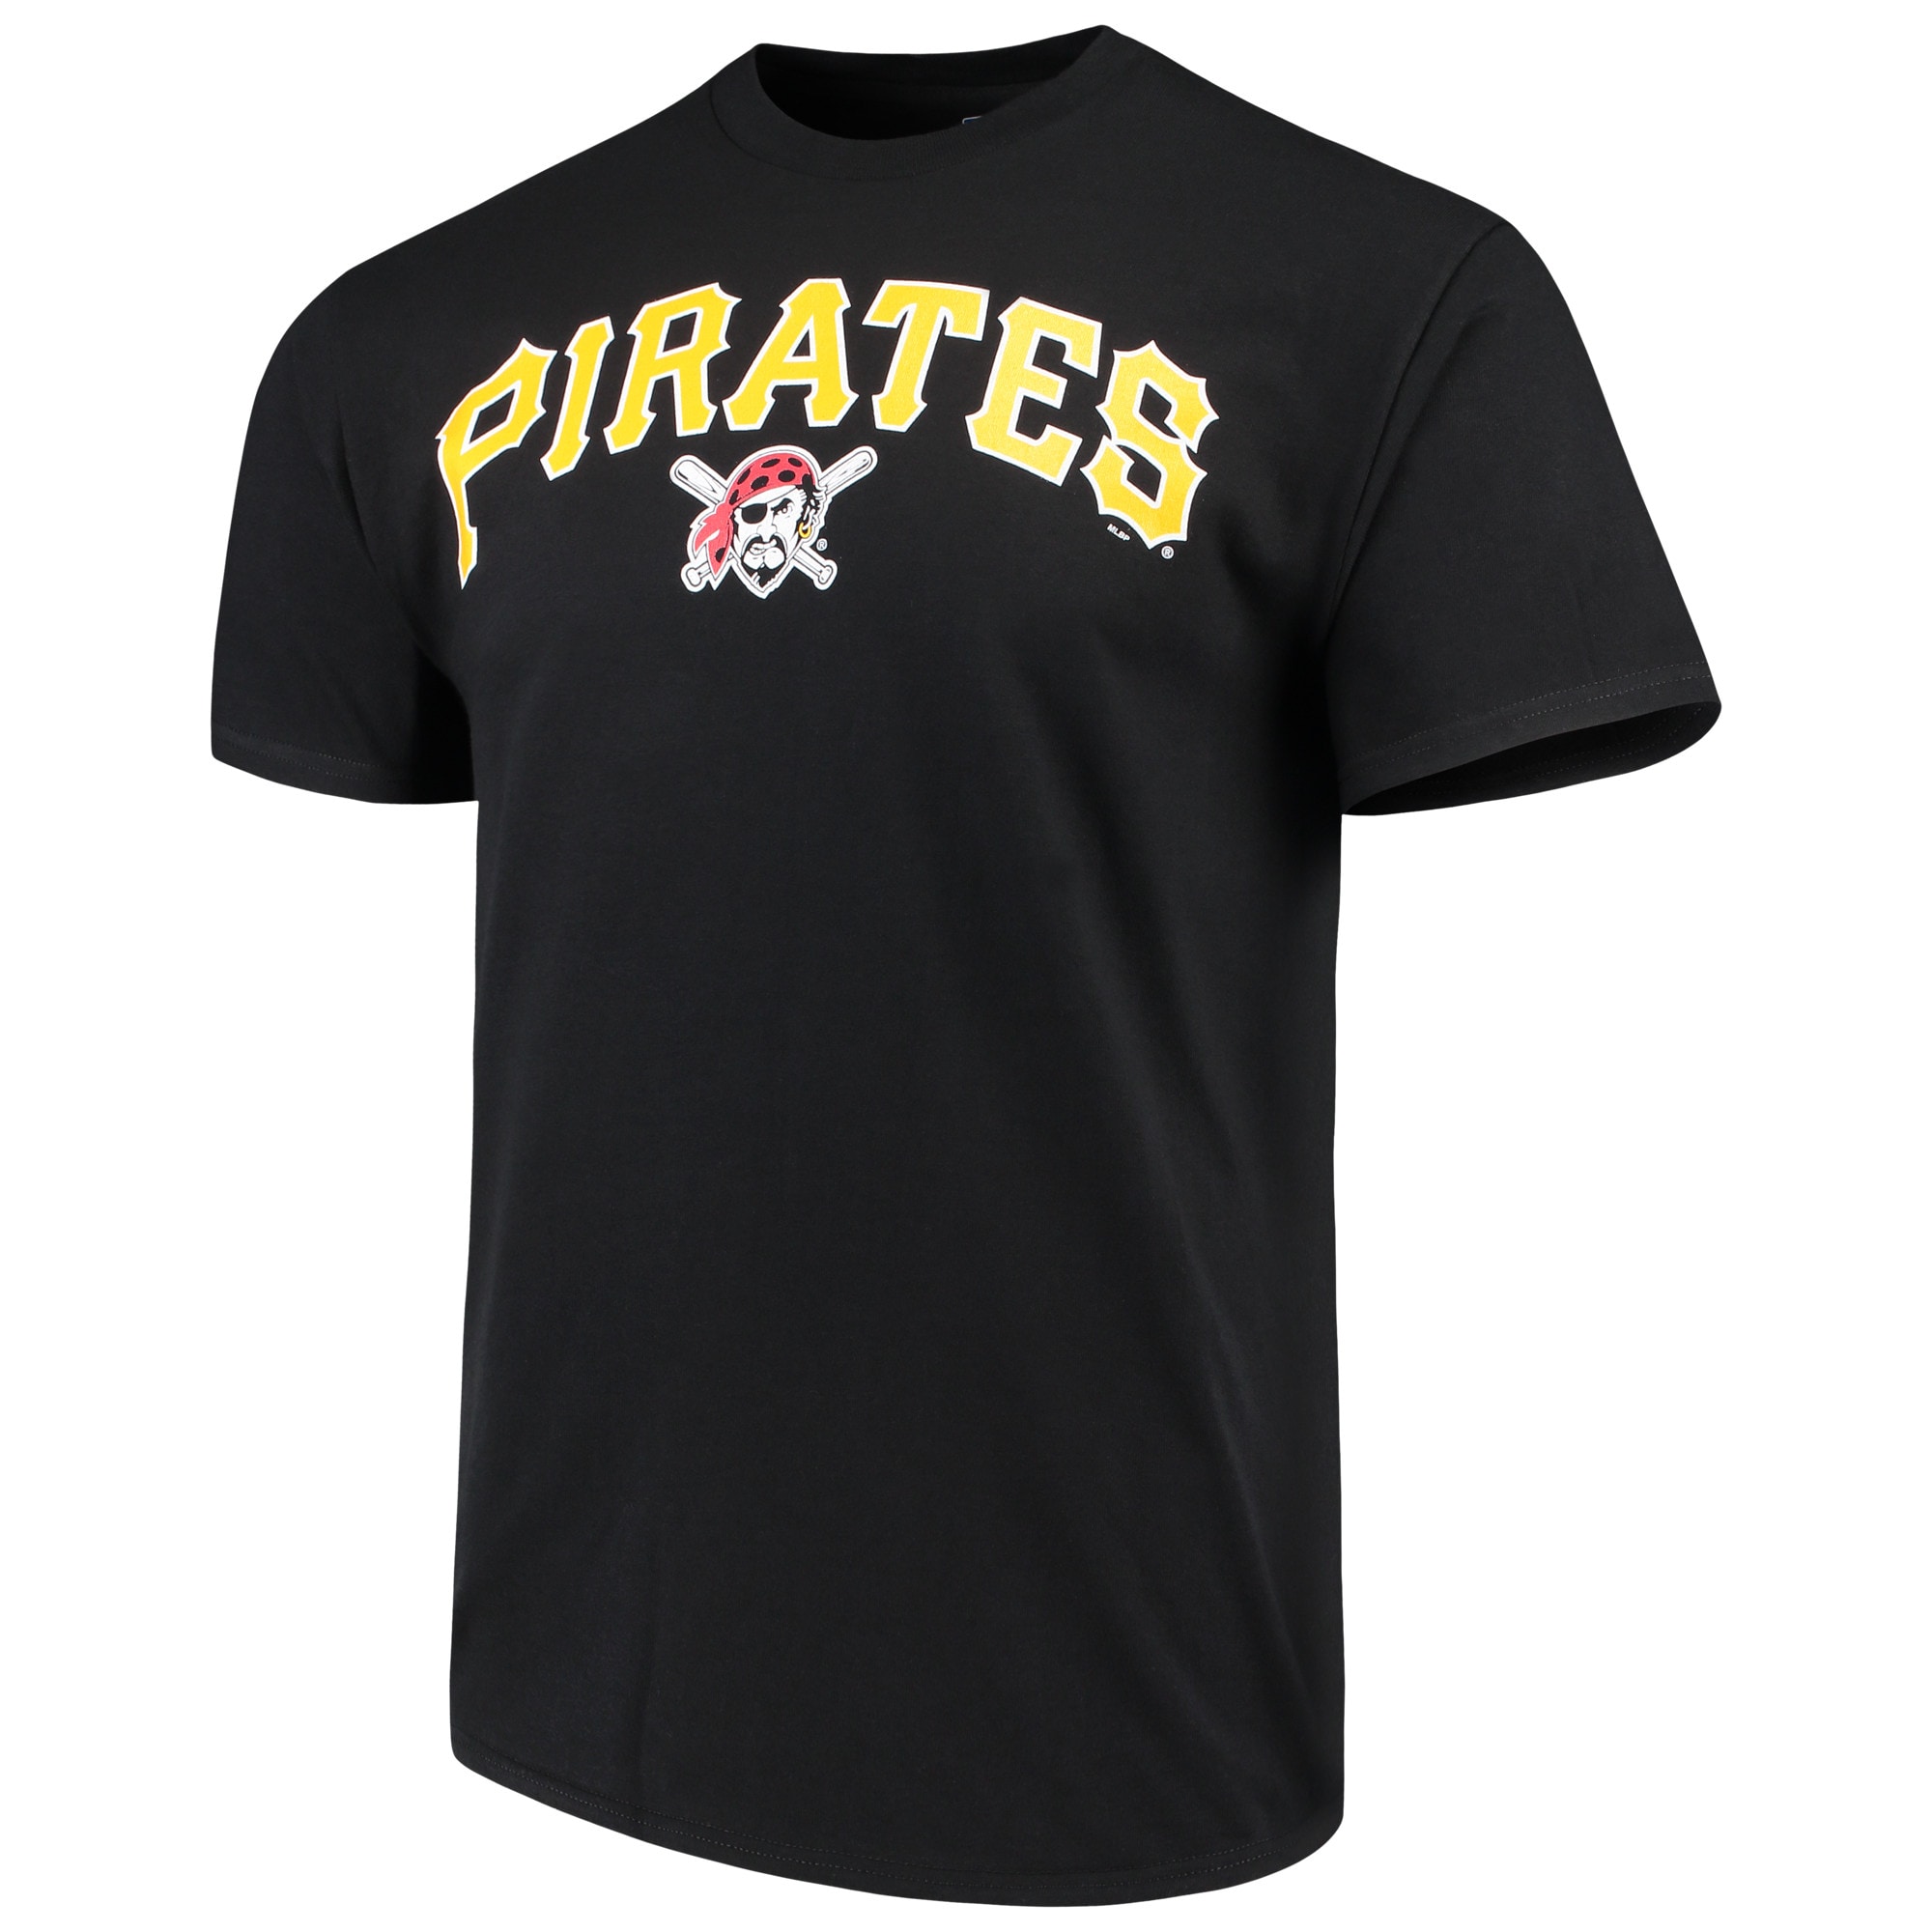 Men's Majestic Black Pittsburgh Pirates Bigger Series Sweep T-Shirt - image 2 of 3